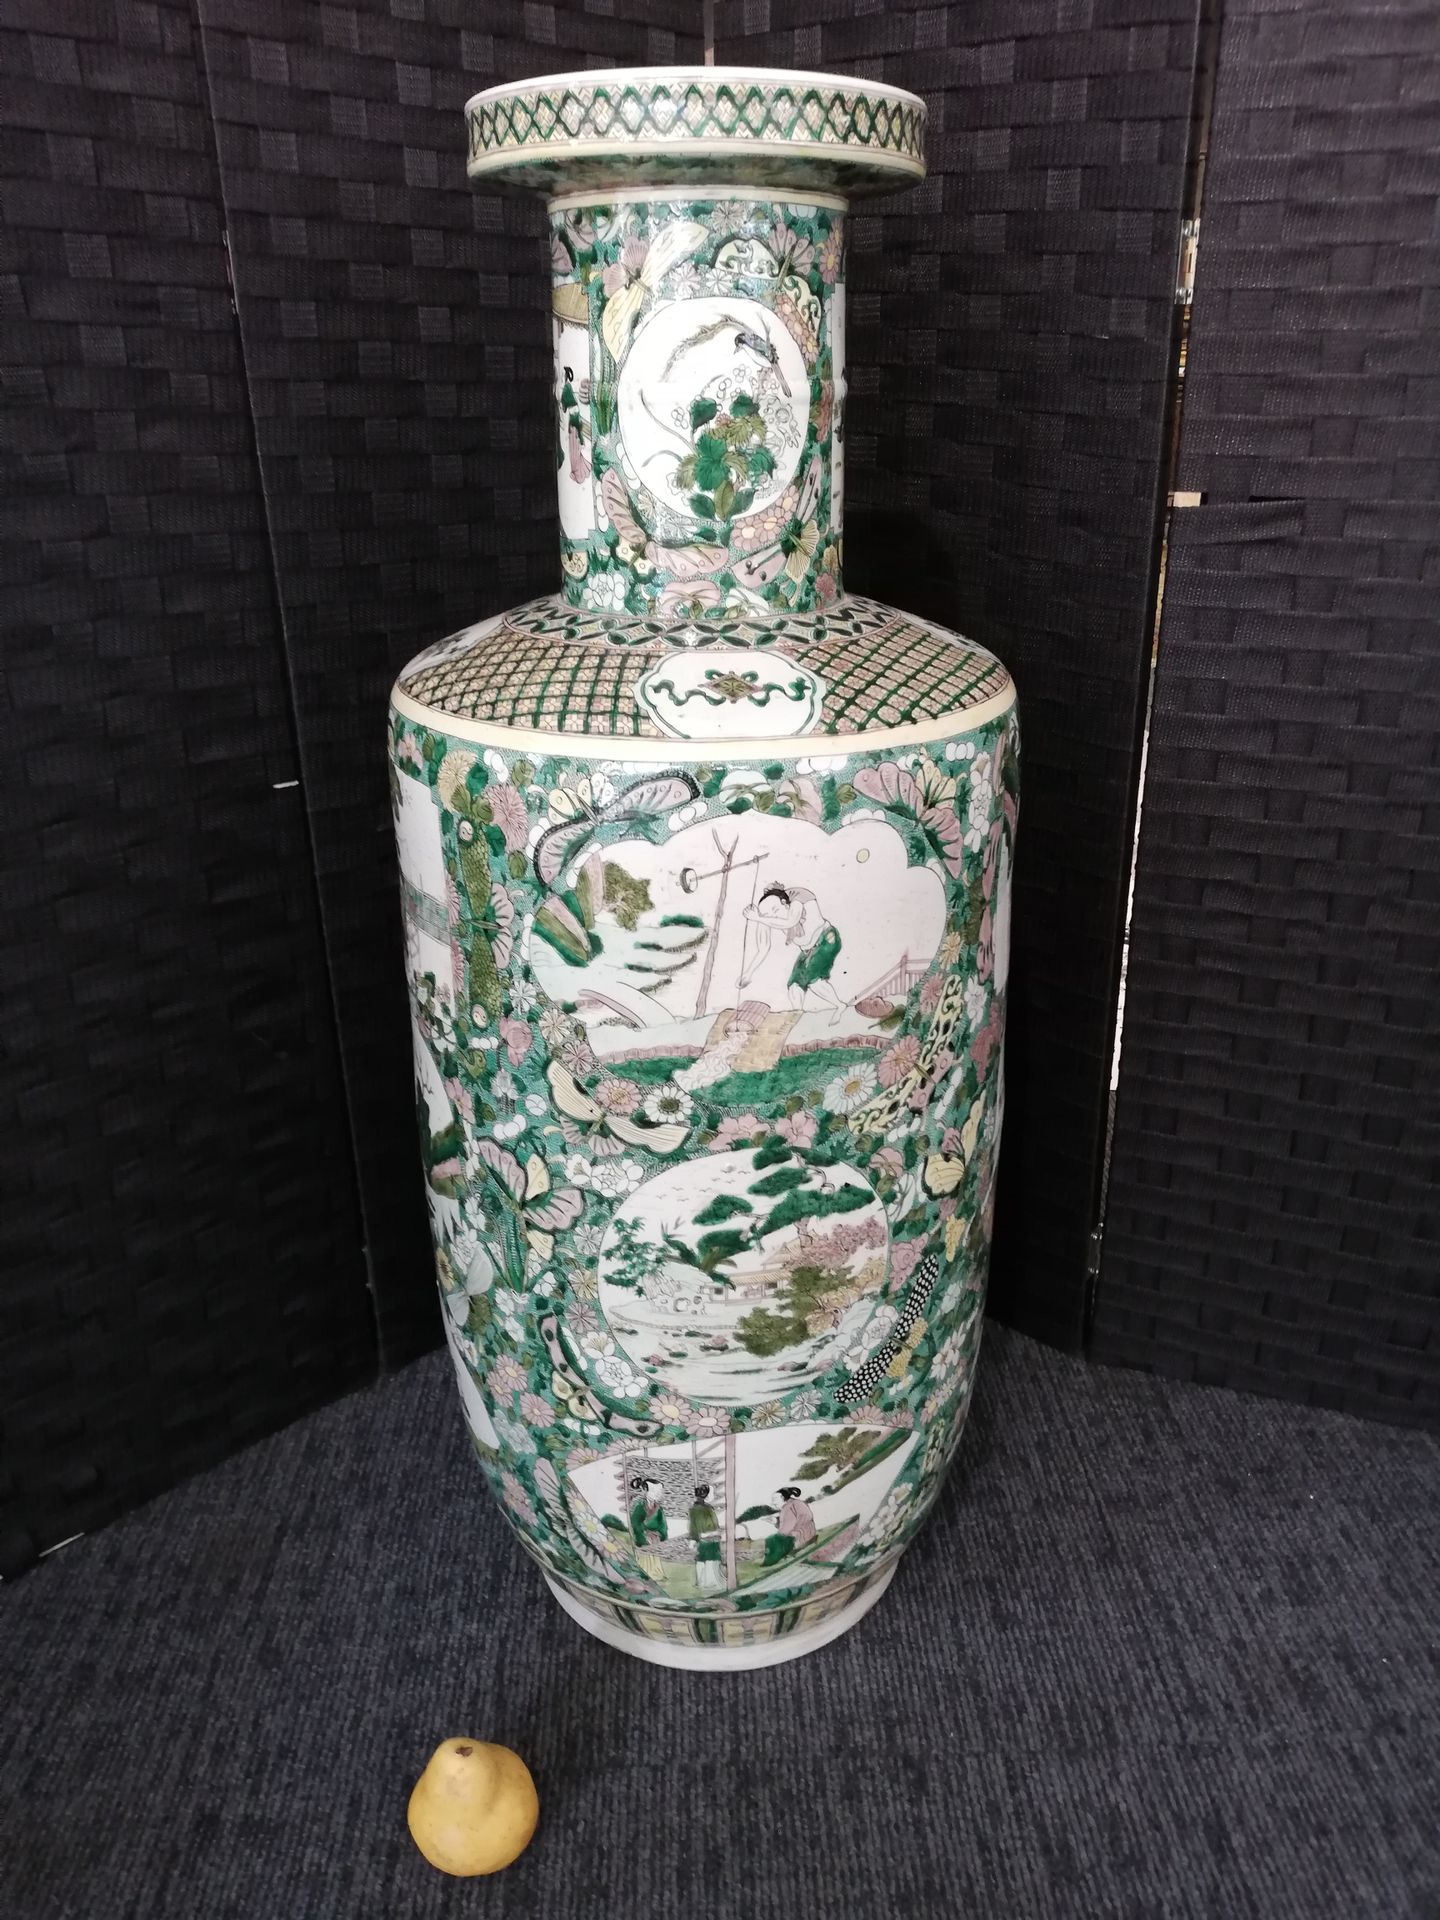 Null 中国，一个大的绿色家族多色瓷器柱形花瓶，在花的背景上装饰有农民场景的奖章。状况非常好。高度：92厘米